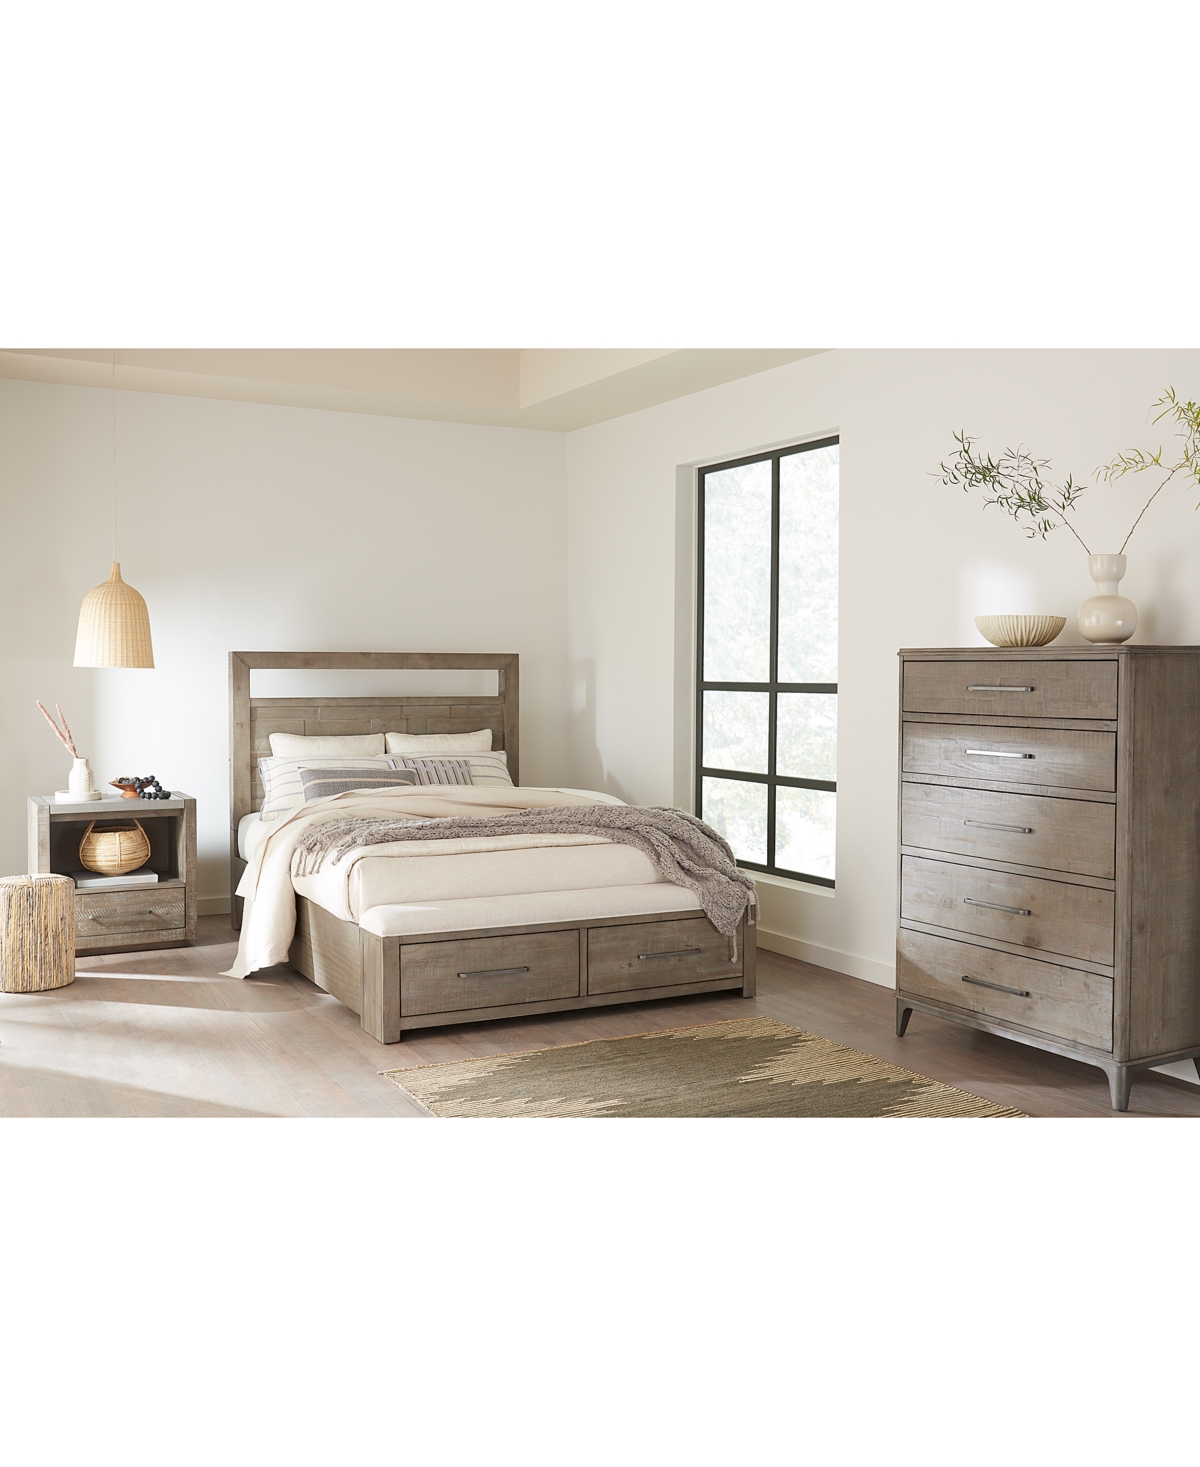 Furniture Intrigue Bedroom 3-pc. Set (queen Bed, Nightstand & Chest)